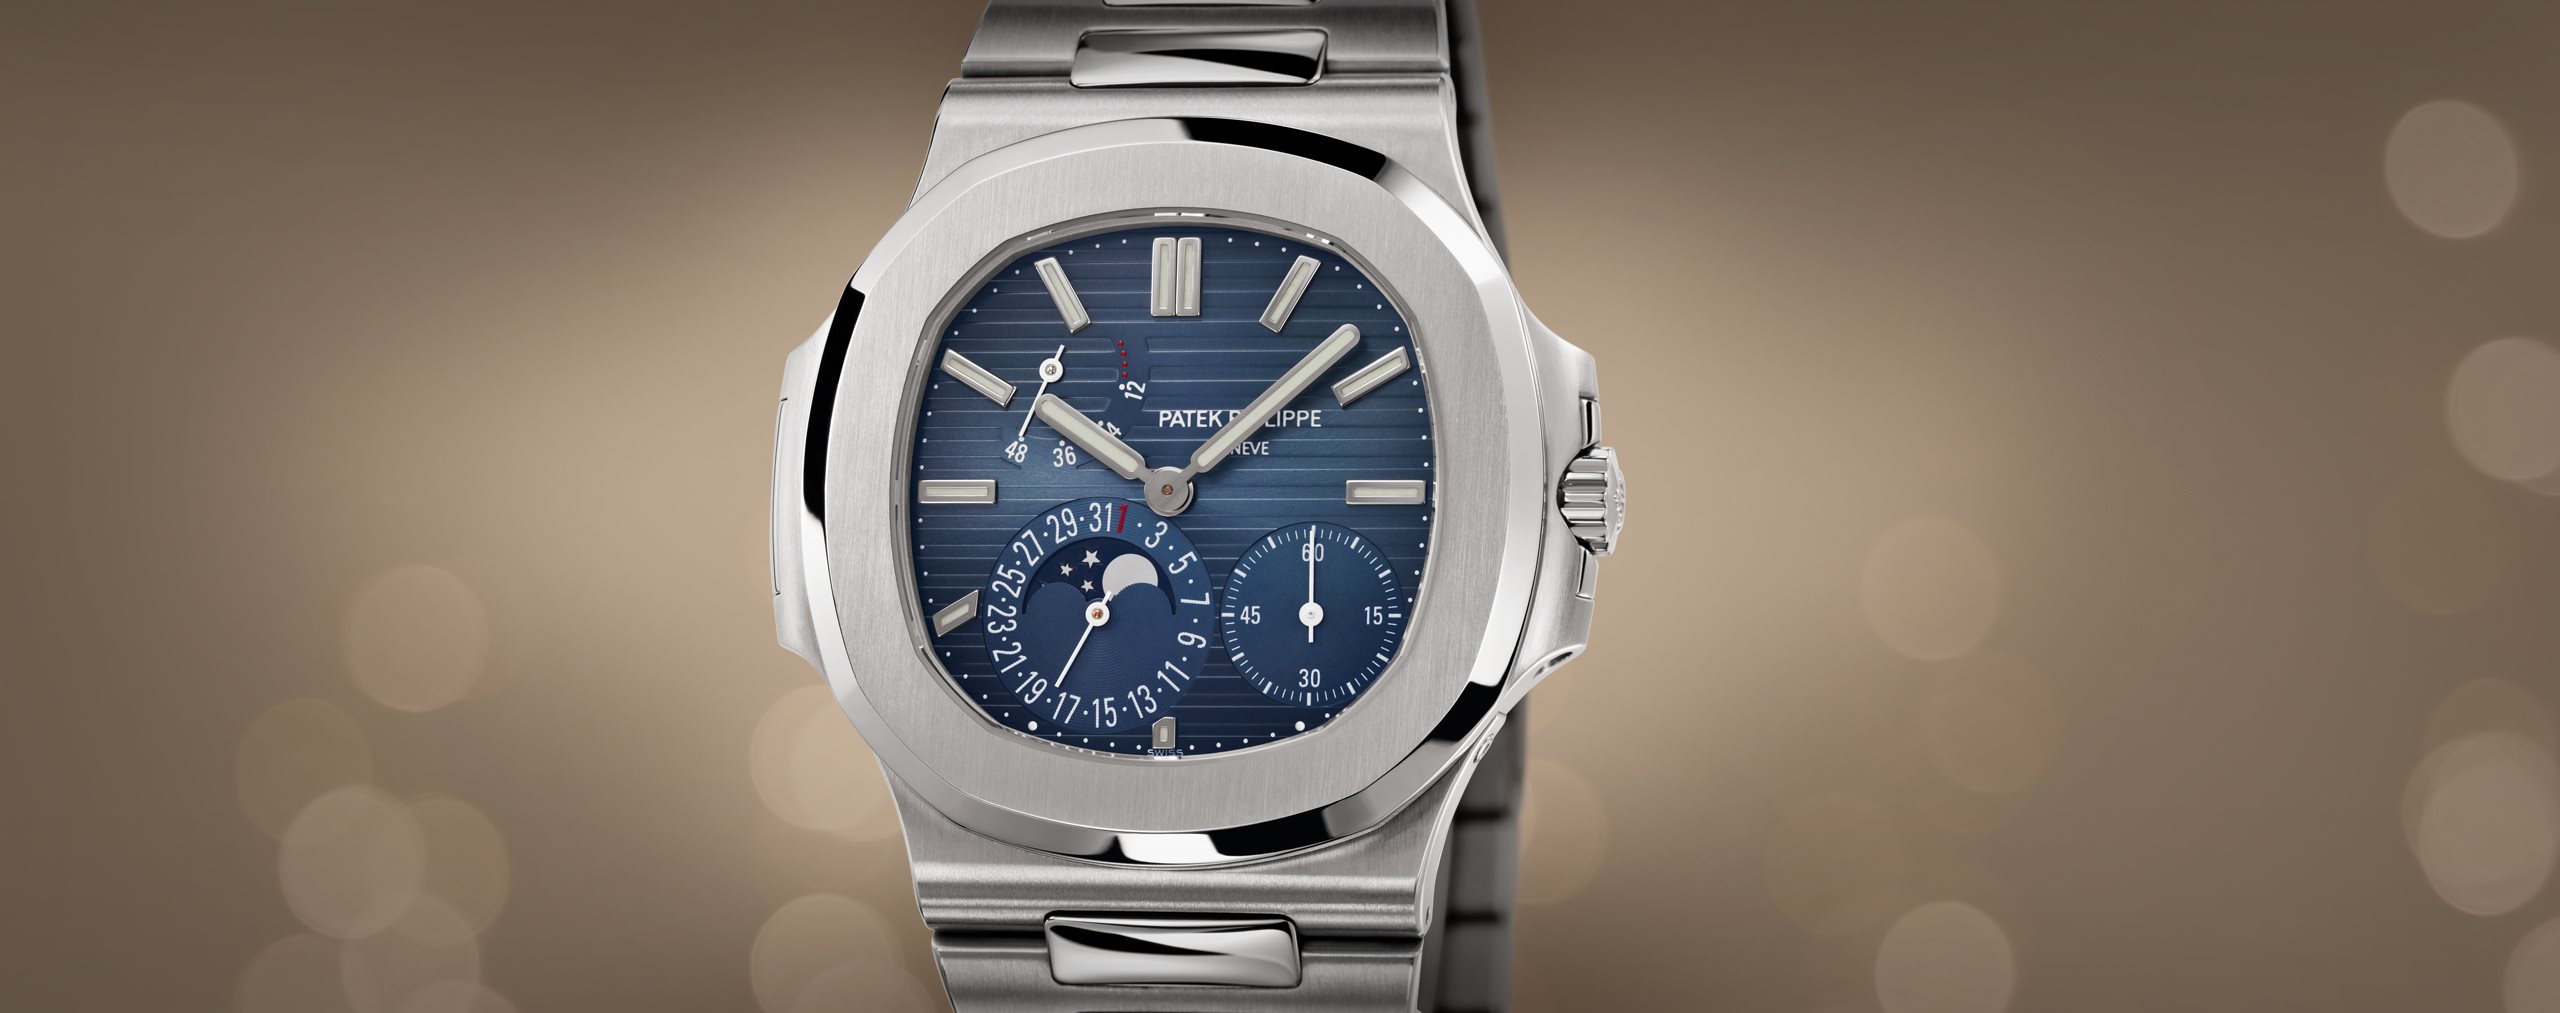 Cartier-tank-americaine-watch Replica